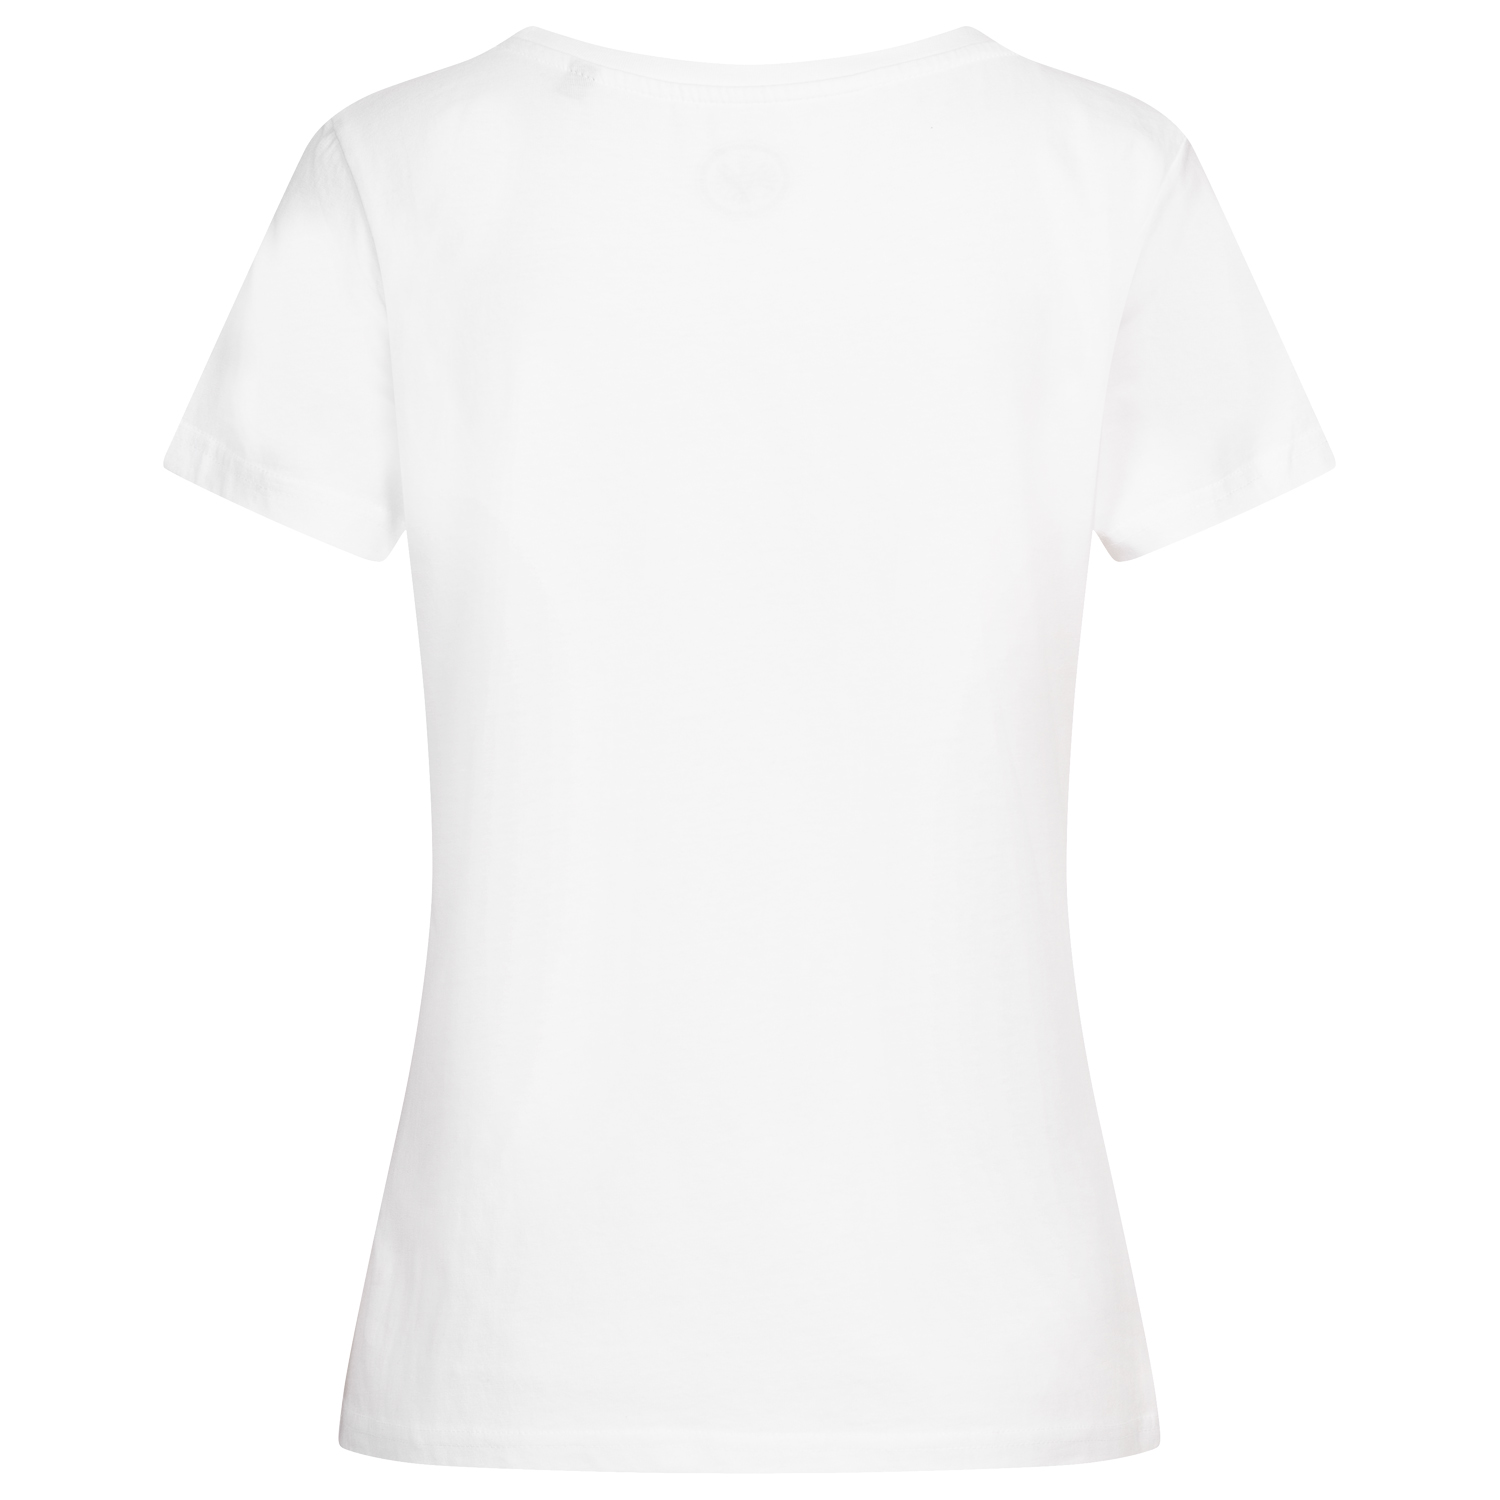 Bild 2: Damen T-Shirt Frankfurter Mädsche